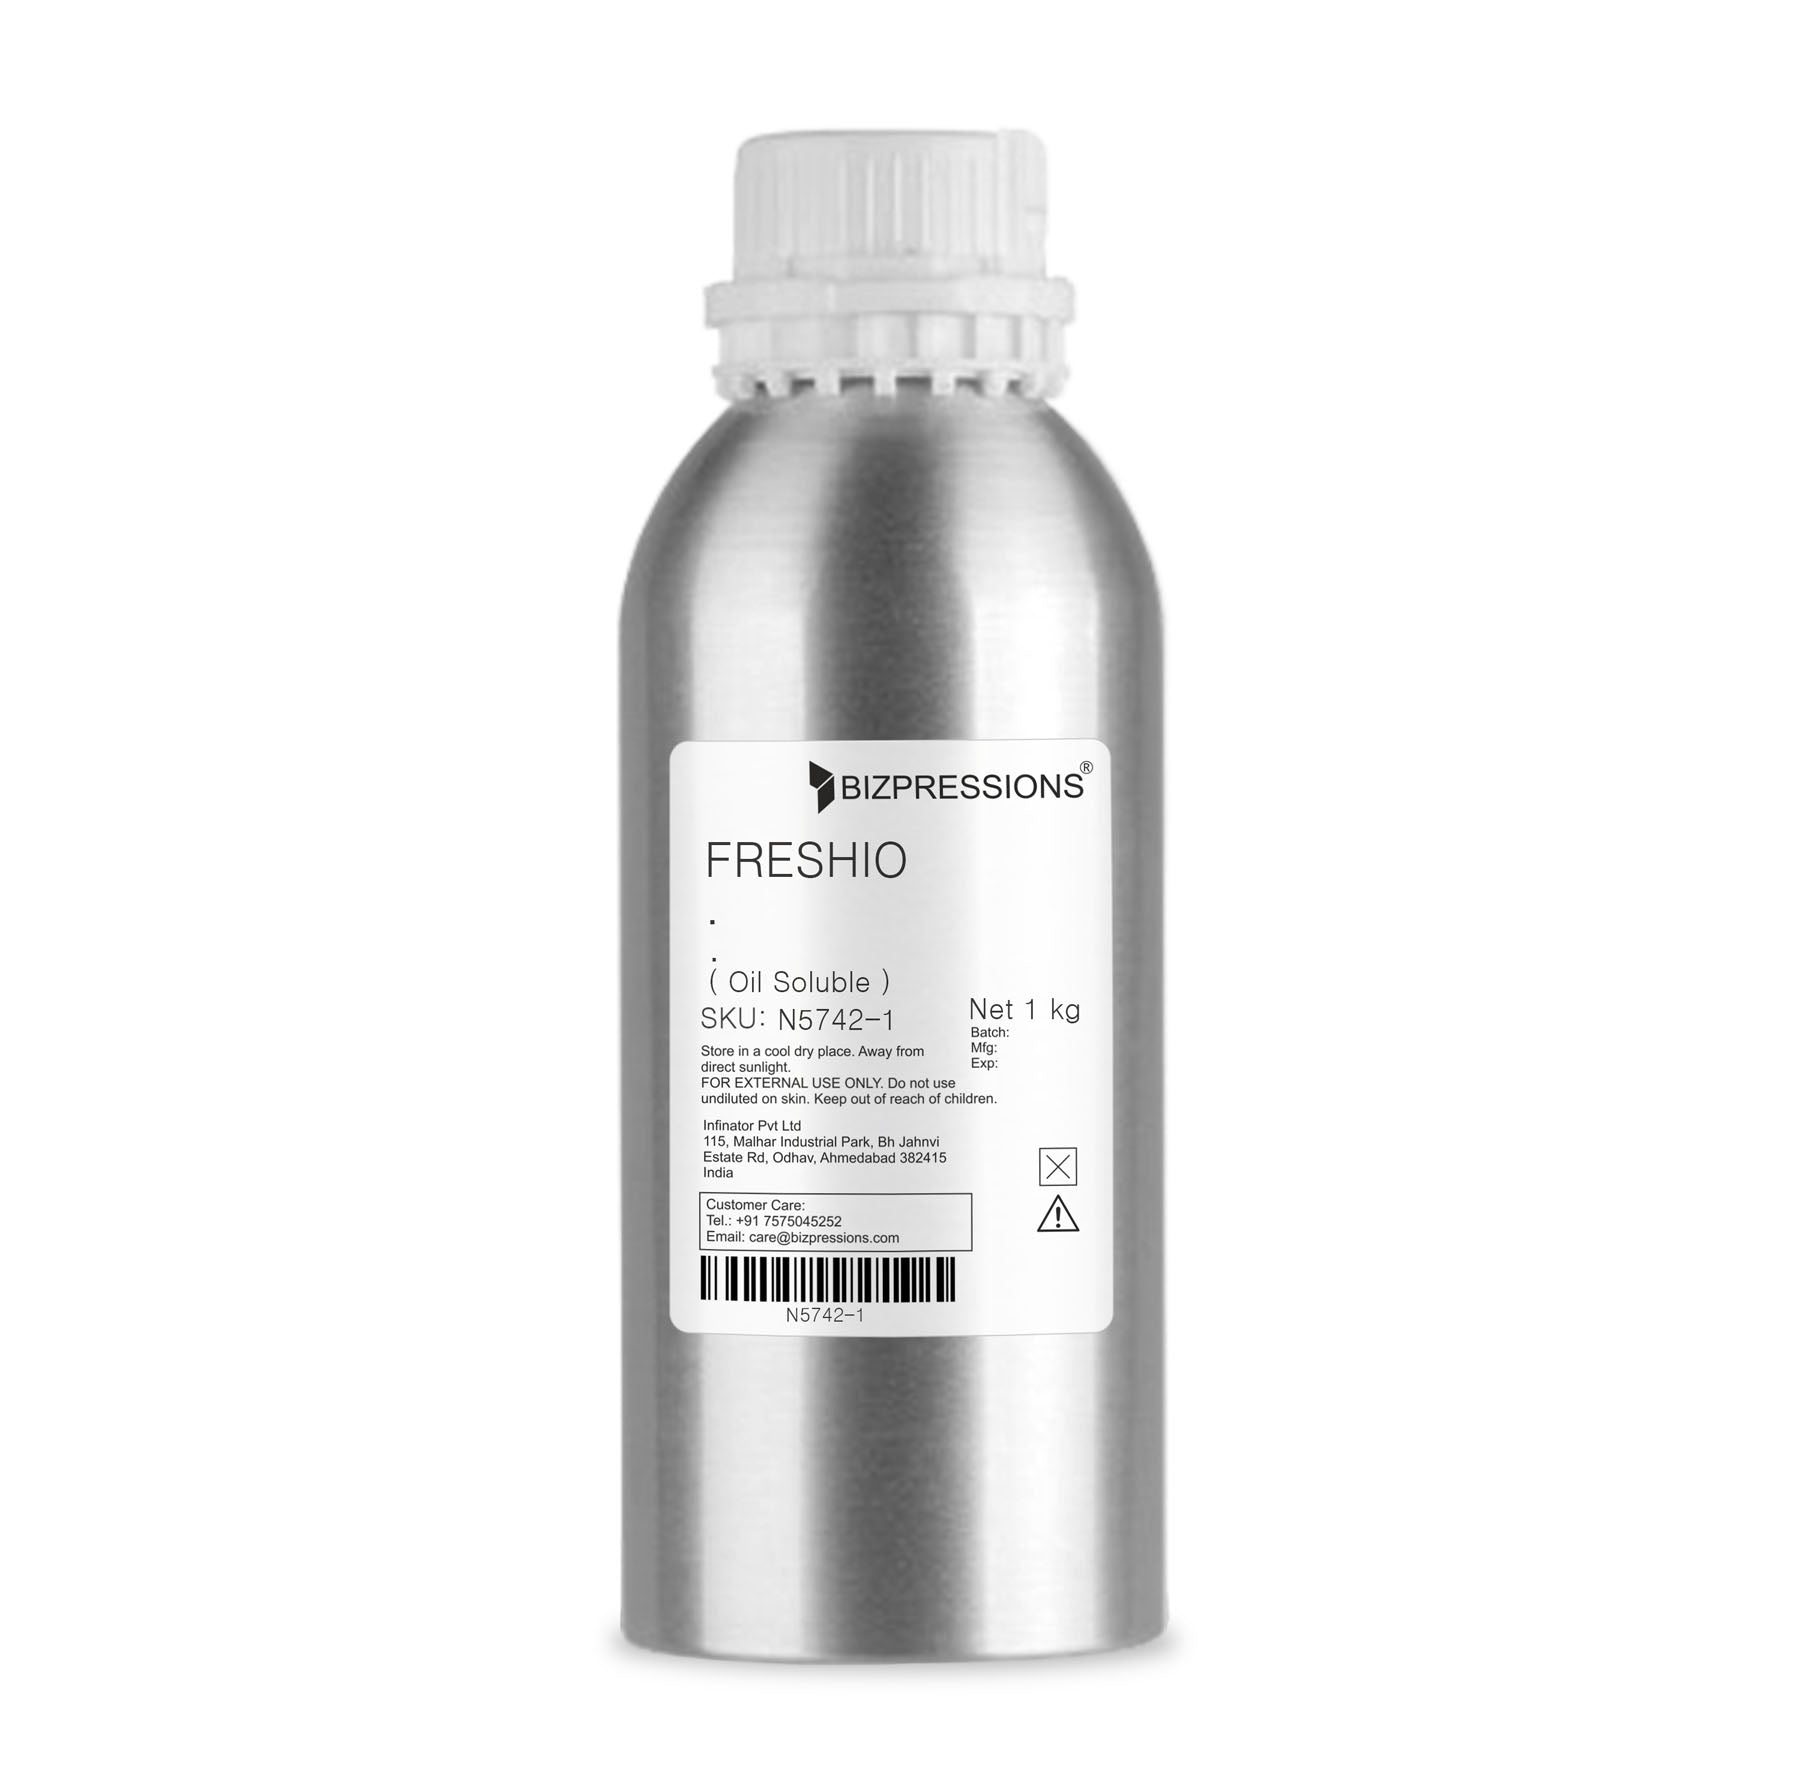 FRESHIO - Fragrance ( Oil Soluble ) - 1 kg